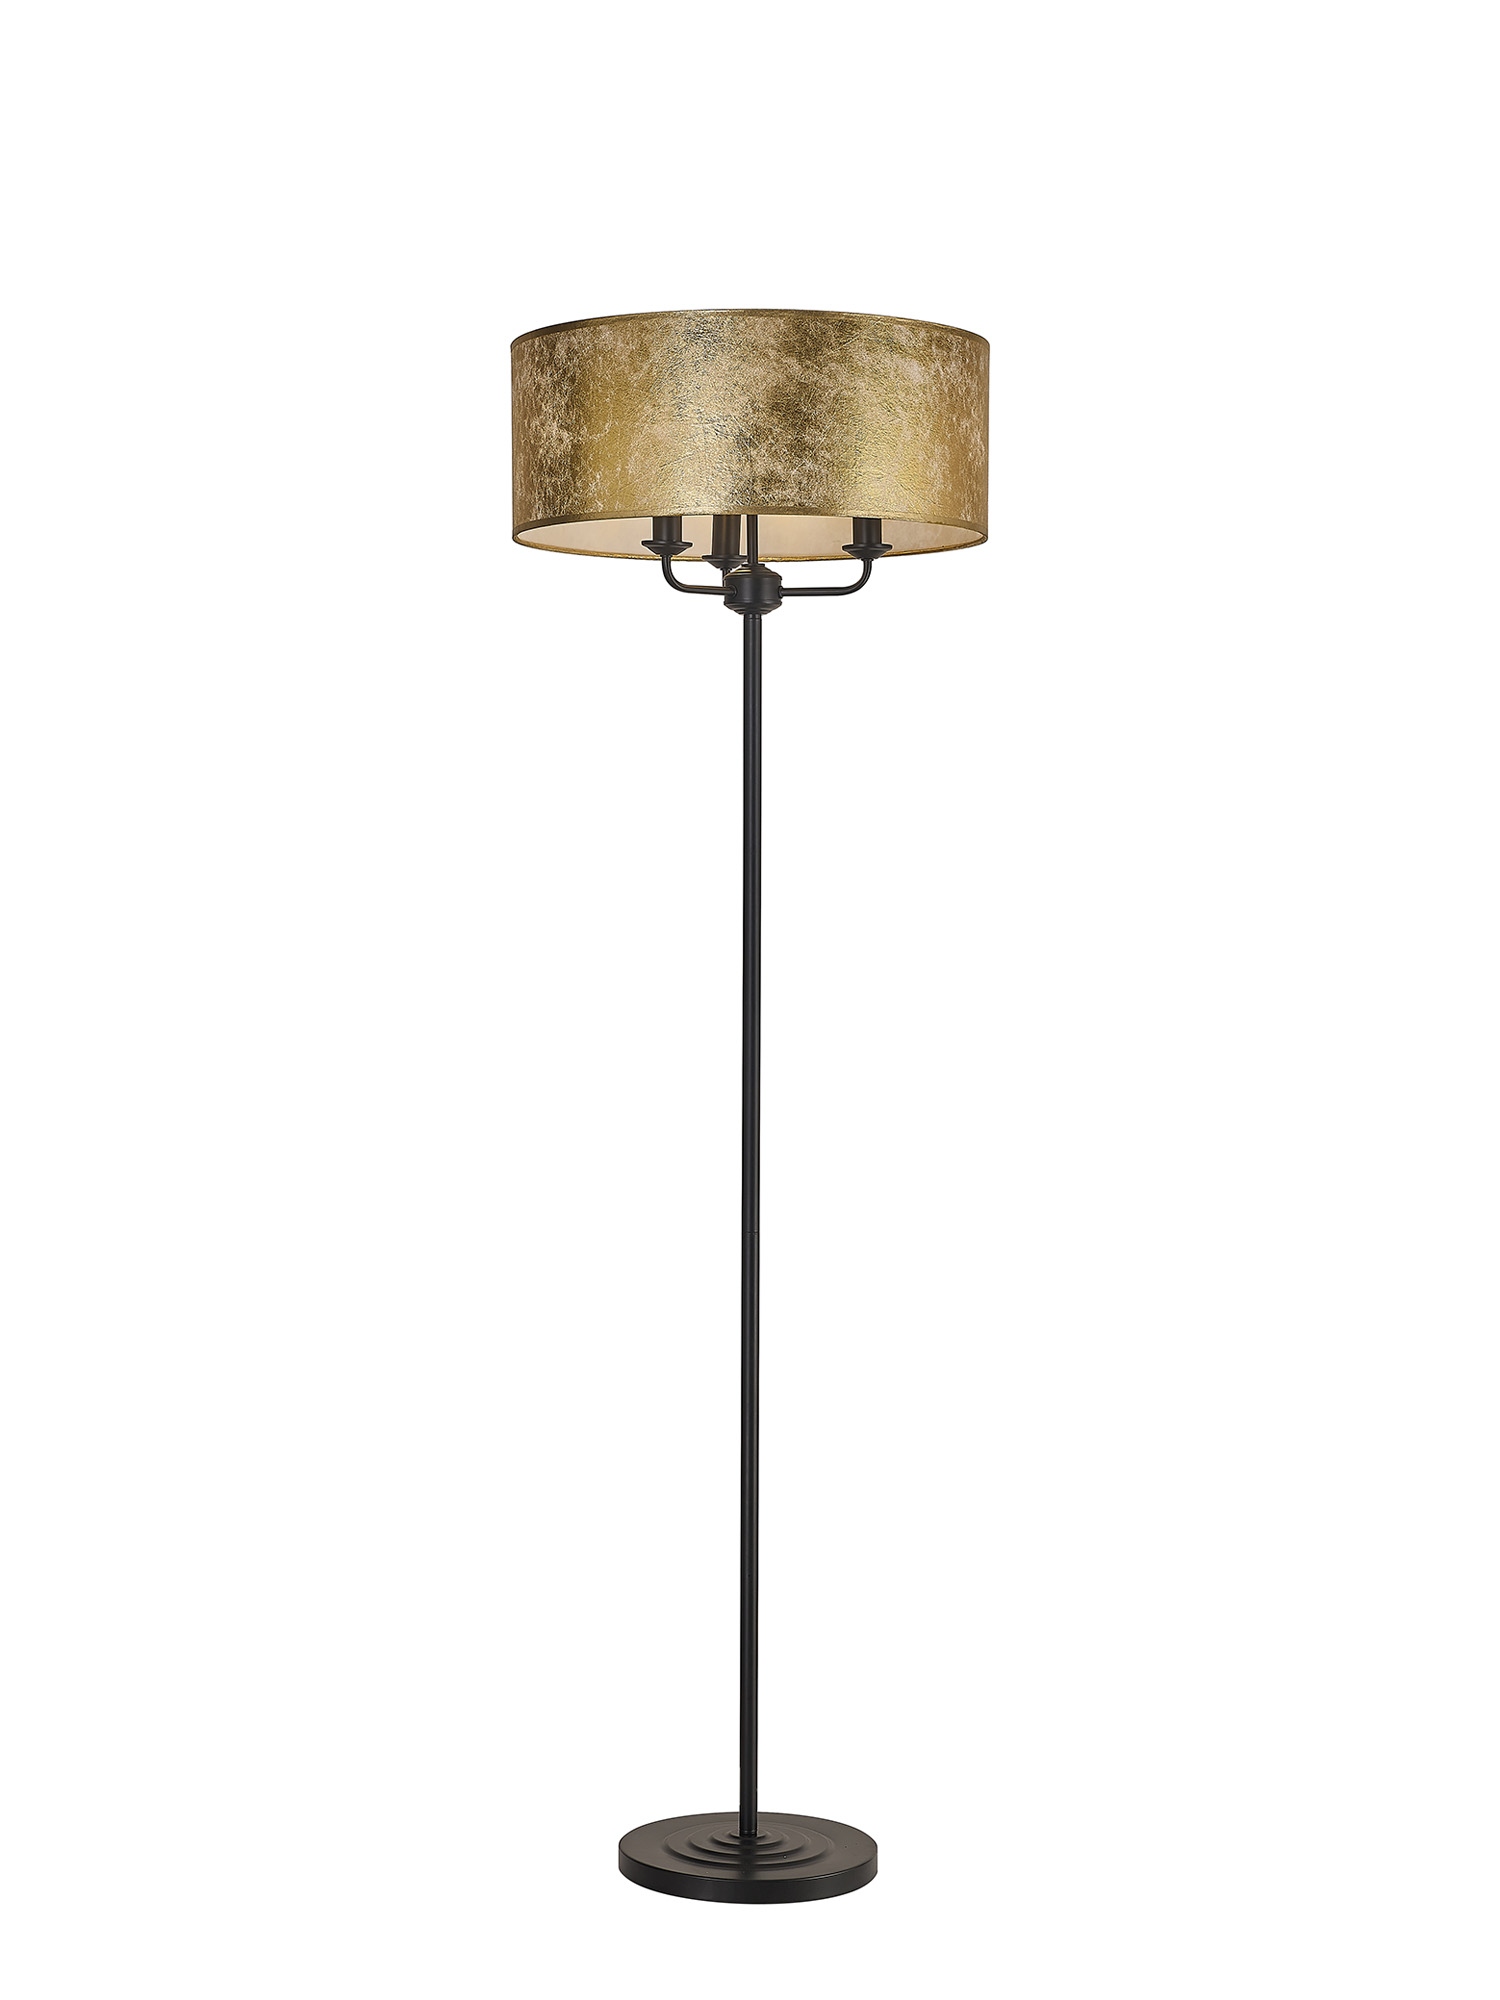 DK1071  Banyan 45cm 3 Light Floor Lamp Matt Black, Gold Leaf